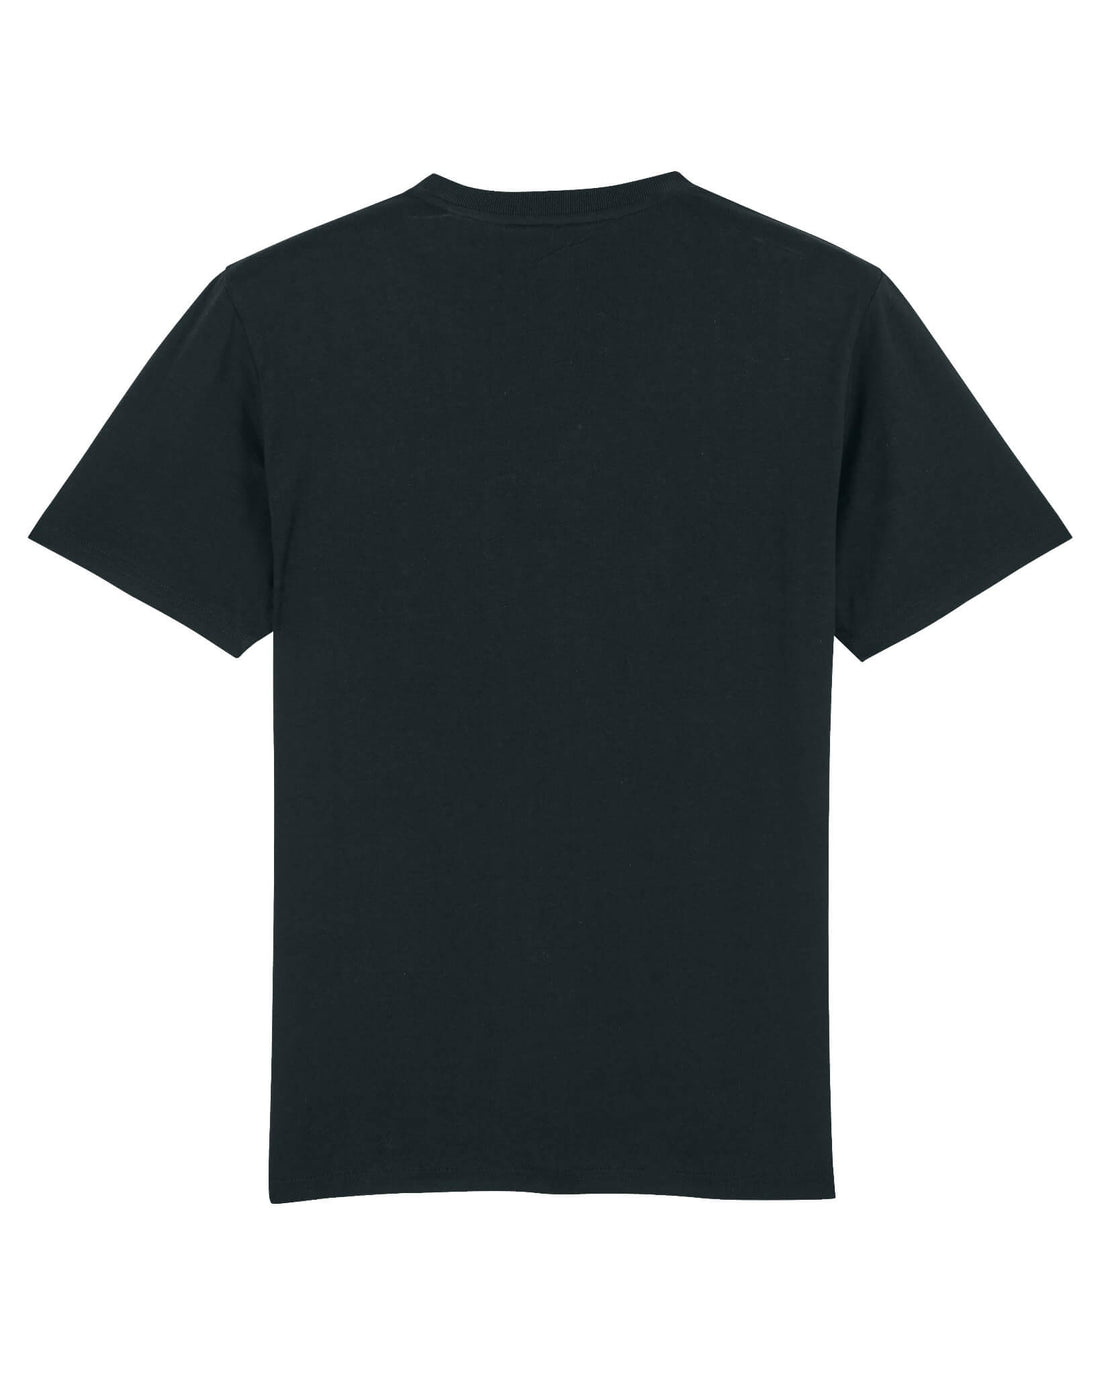 Black Skater T-Shirt, The Supply Network Back Print